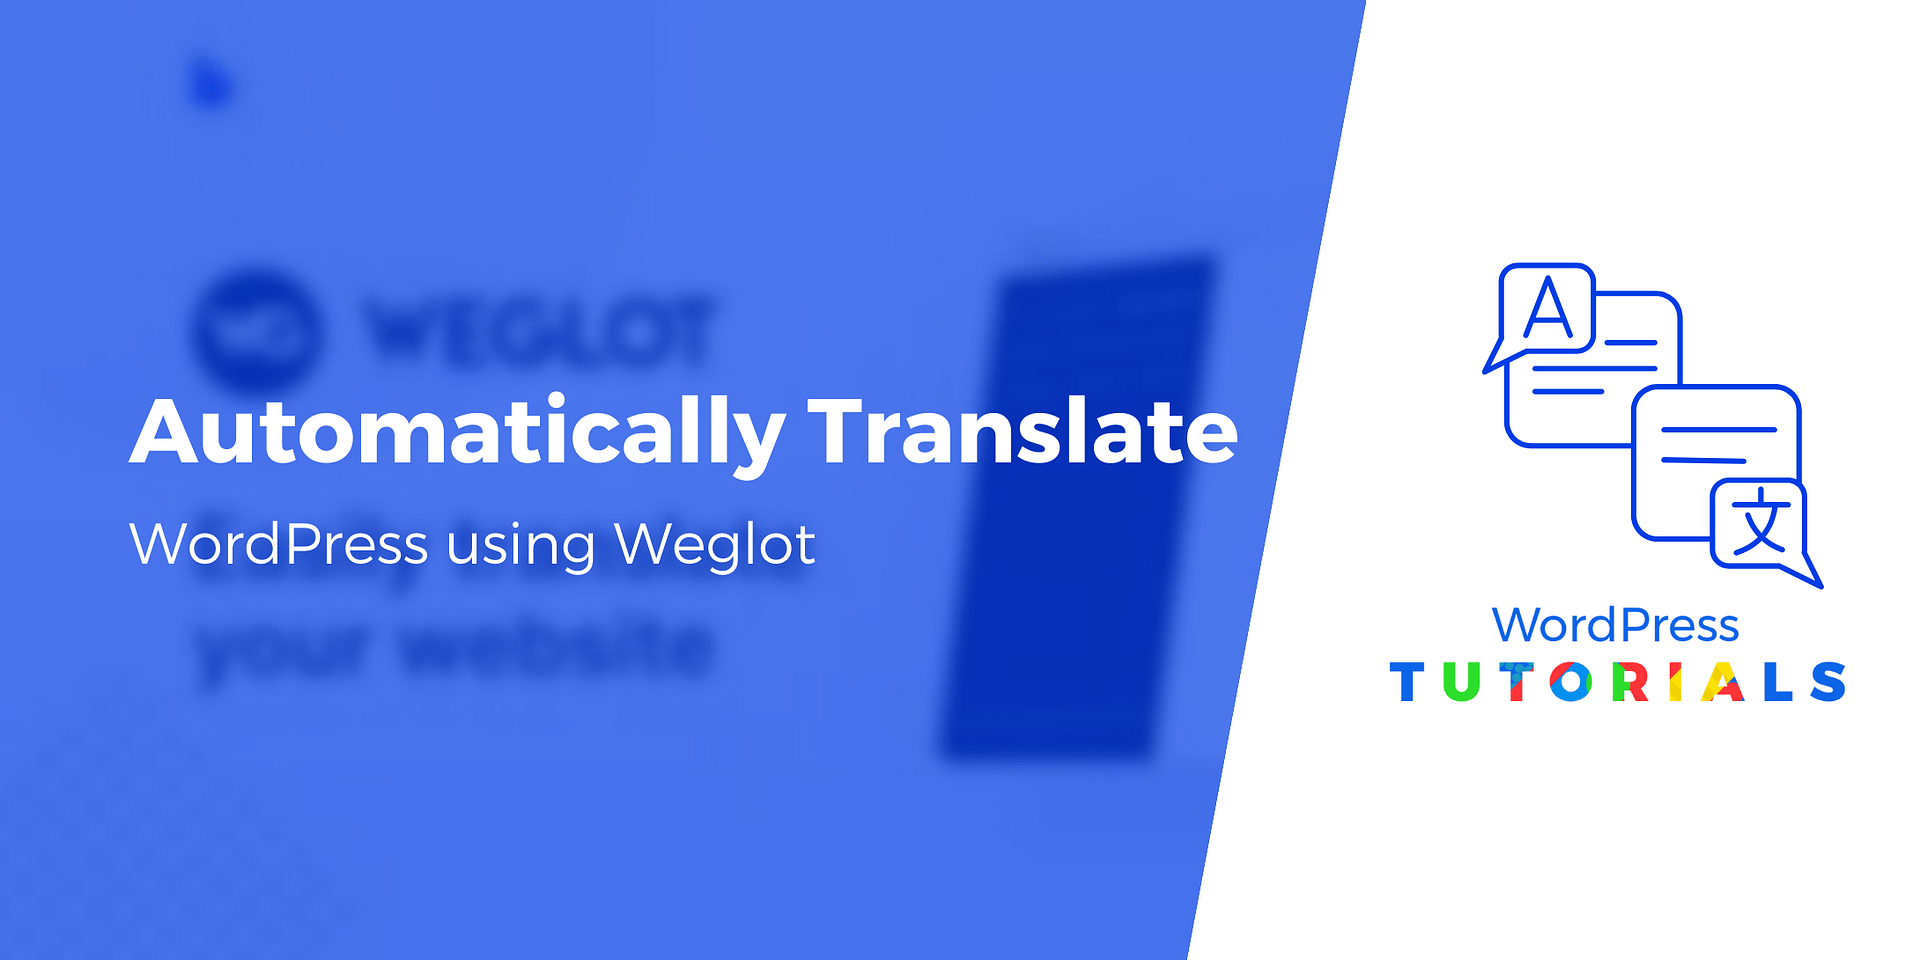 herberg hoeveelheid verkoop krab How to Automatically Translate WordPress (Using Weglot)